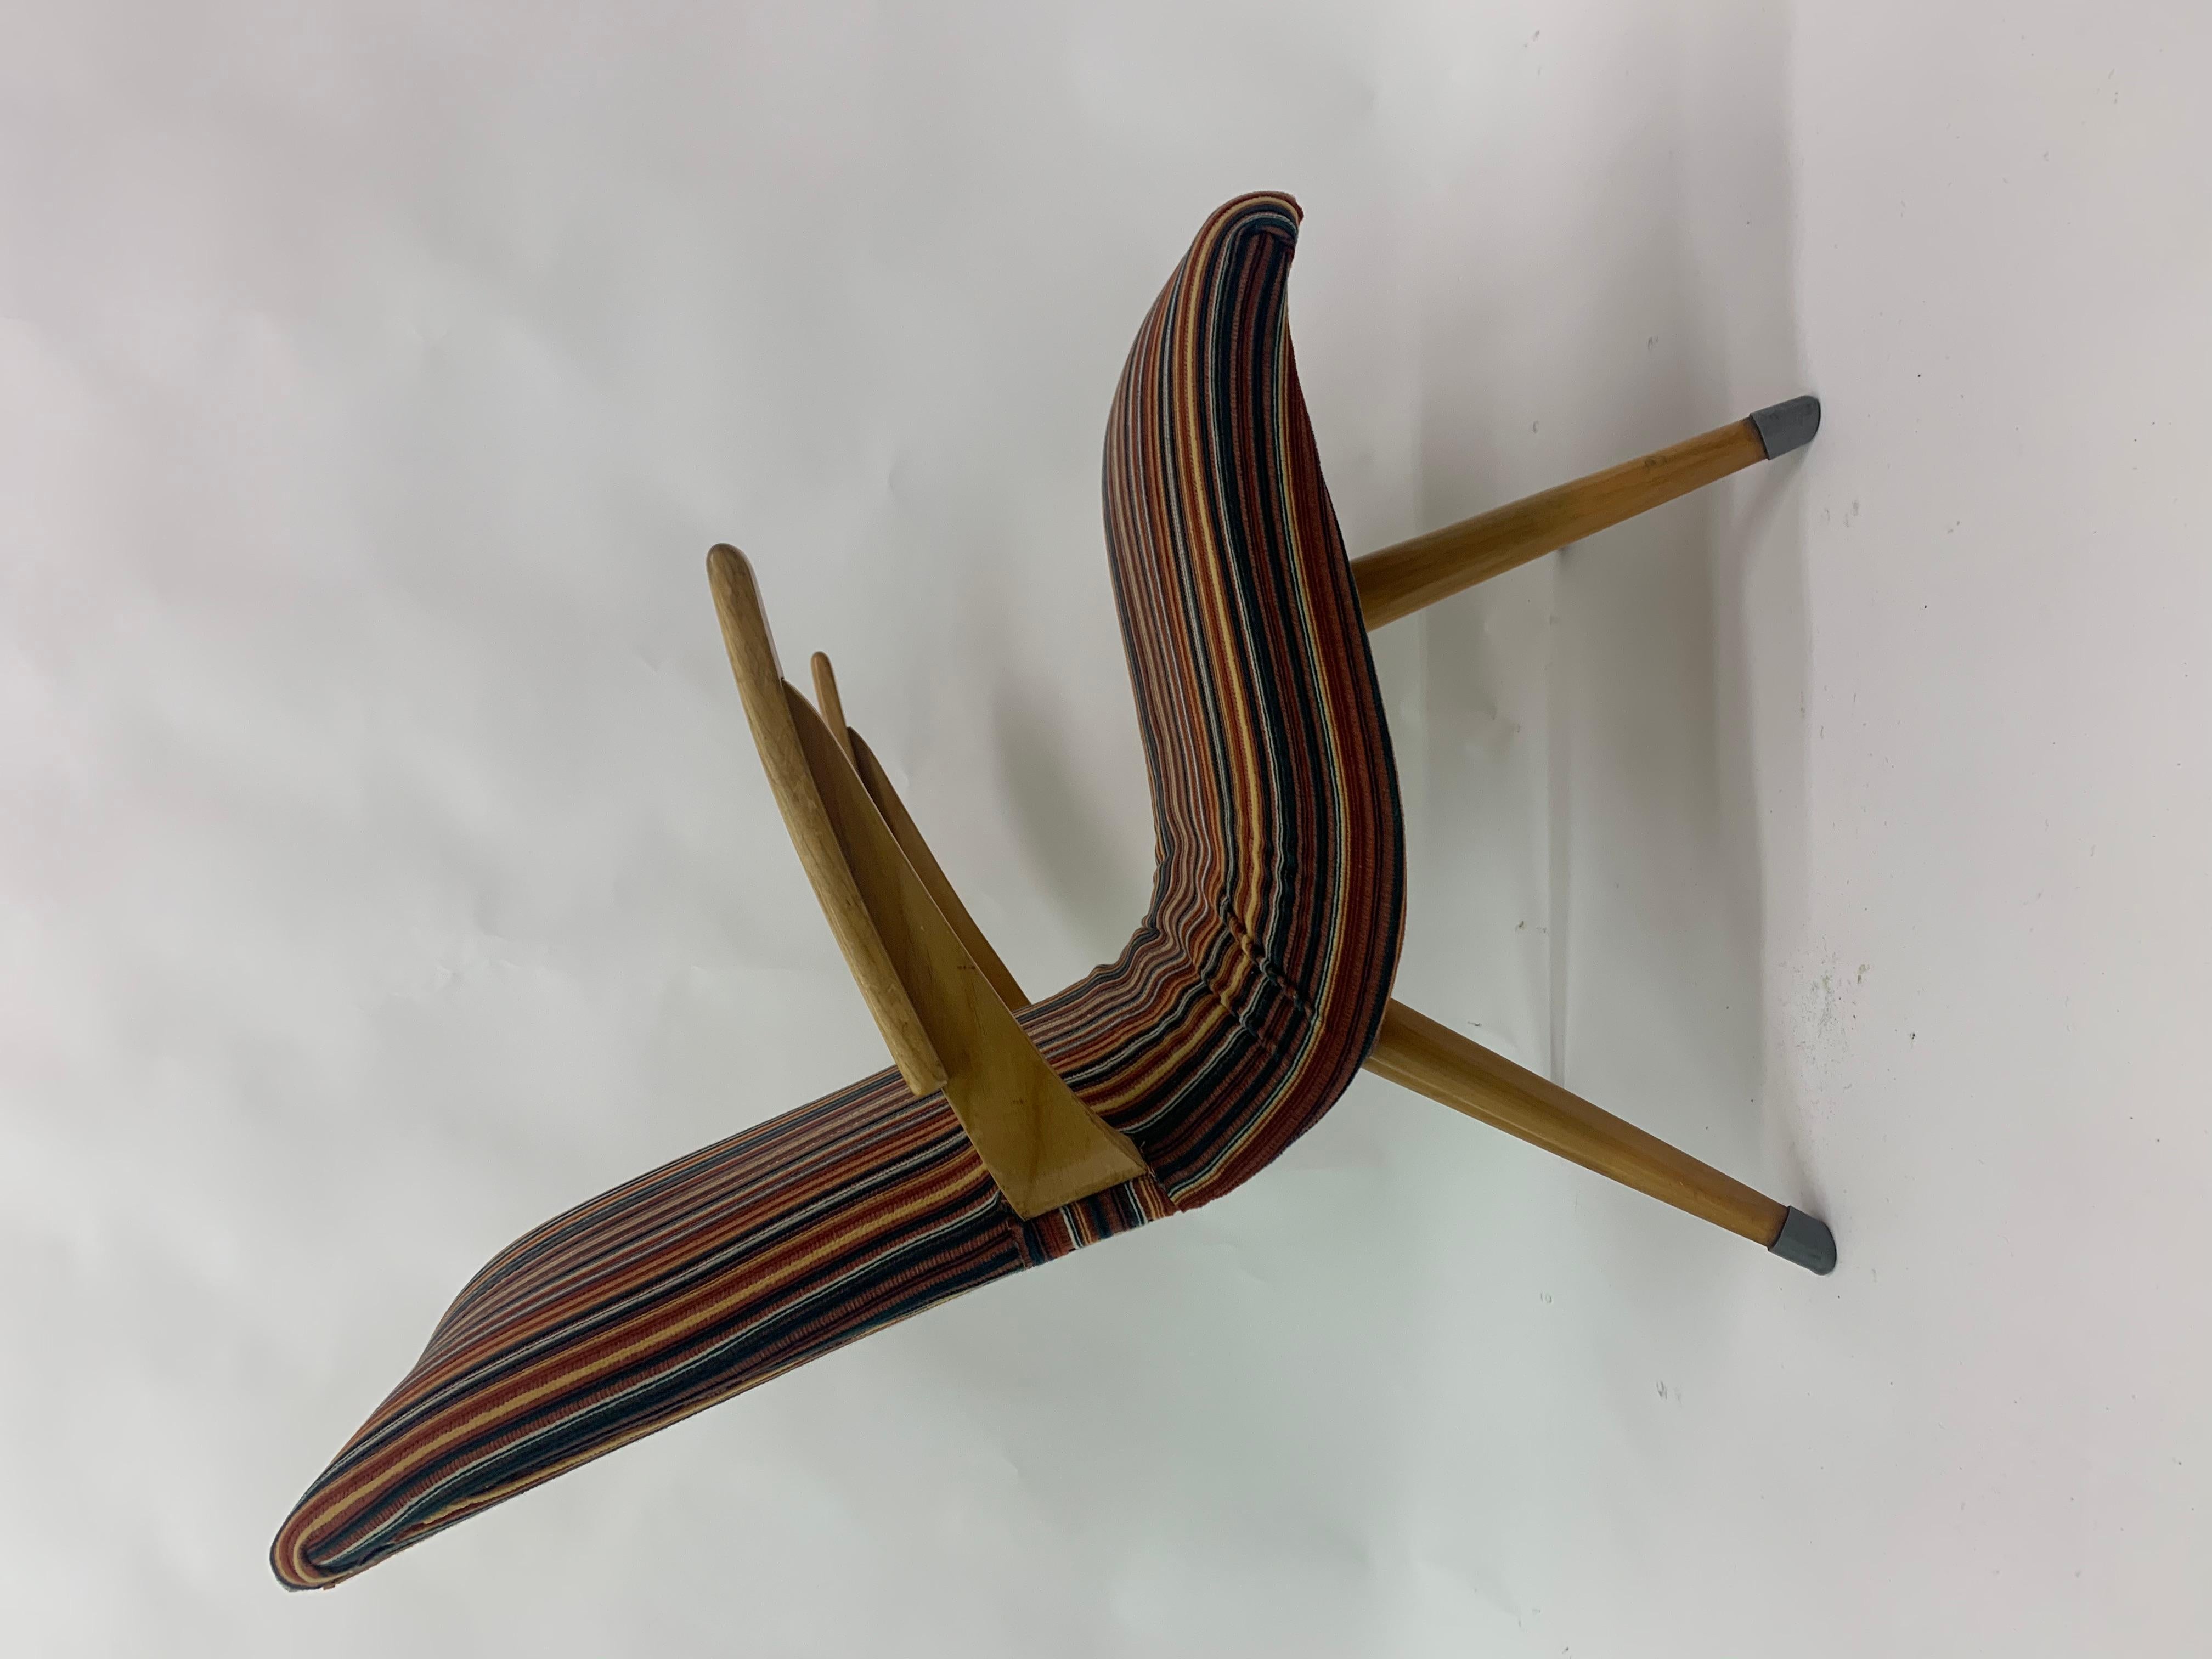 Unique 1950s lounge chair Dutch design designer C Van Os. The upholstery is renewed. The chair is in good vintage condition.

Dimensions: 84cm D, 63 cm H armrest, 65cm W, 38cm H seat, 90cm H total.